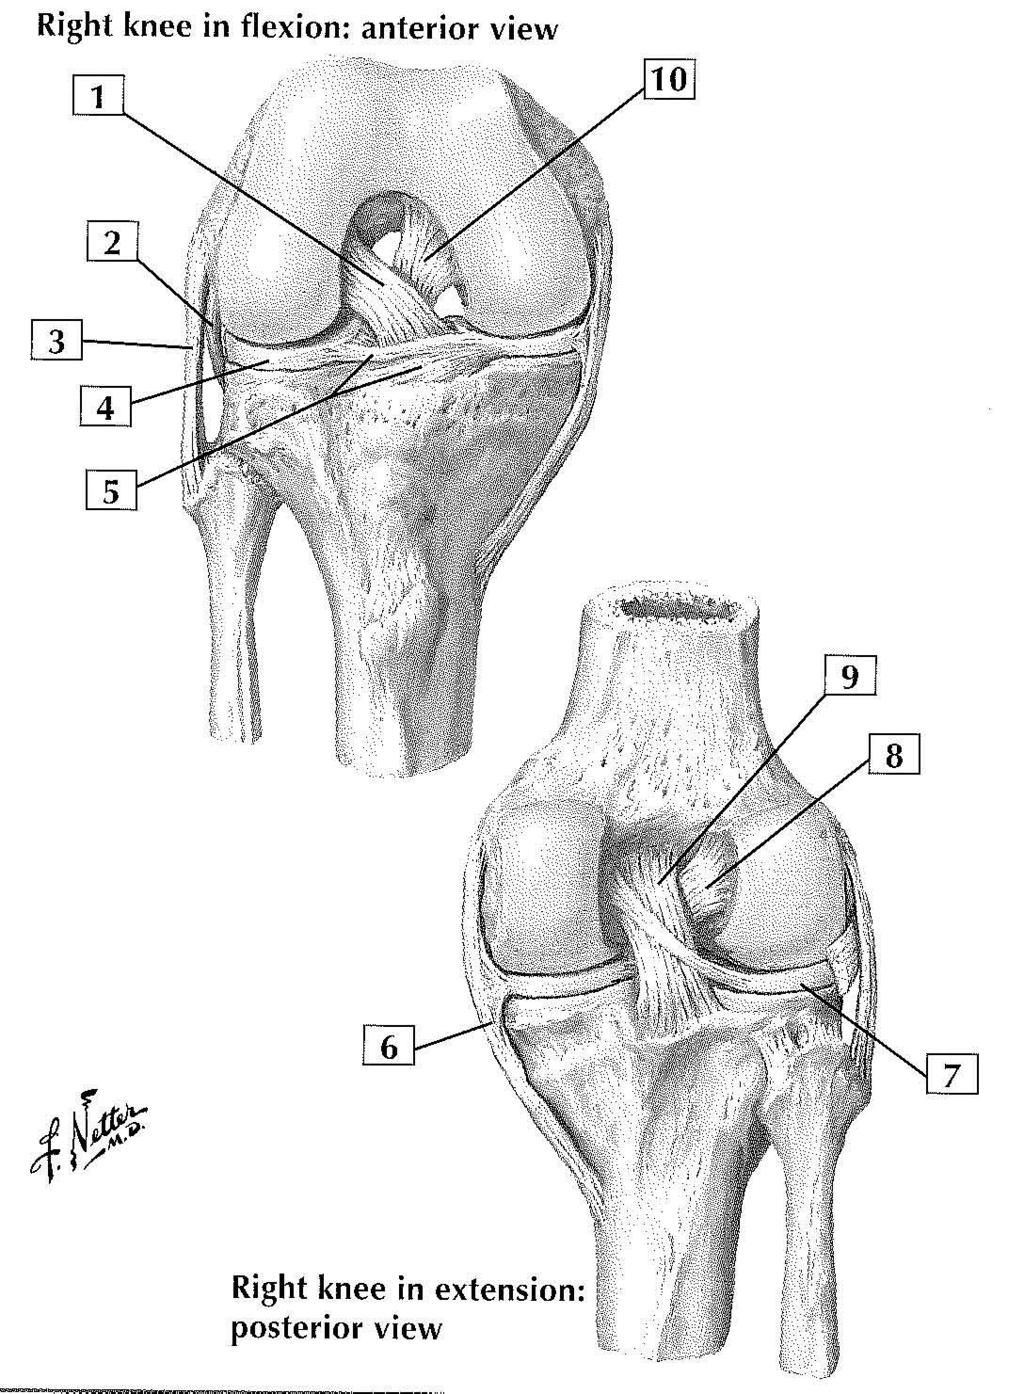 CRUCIATE AND COLLATERAL LIGAMENTS 1. Anterior cruciate ligament 2. Popliteus tendon 3. Fibular collateral ligament 4. Lateral meniscus 5. Transverse ligament 6.